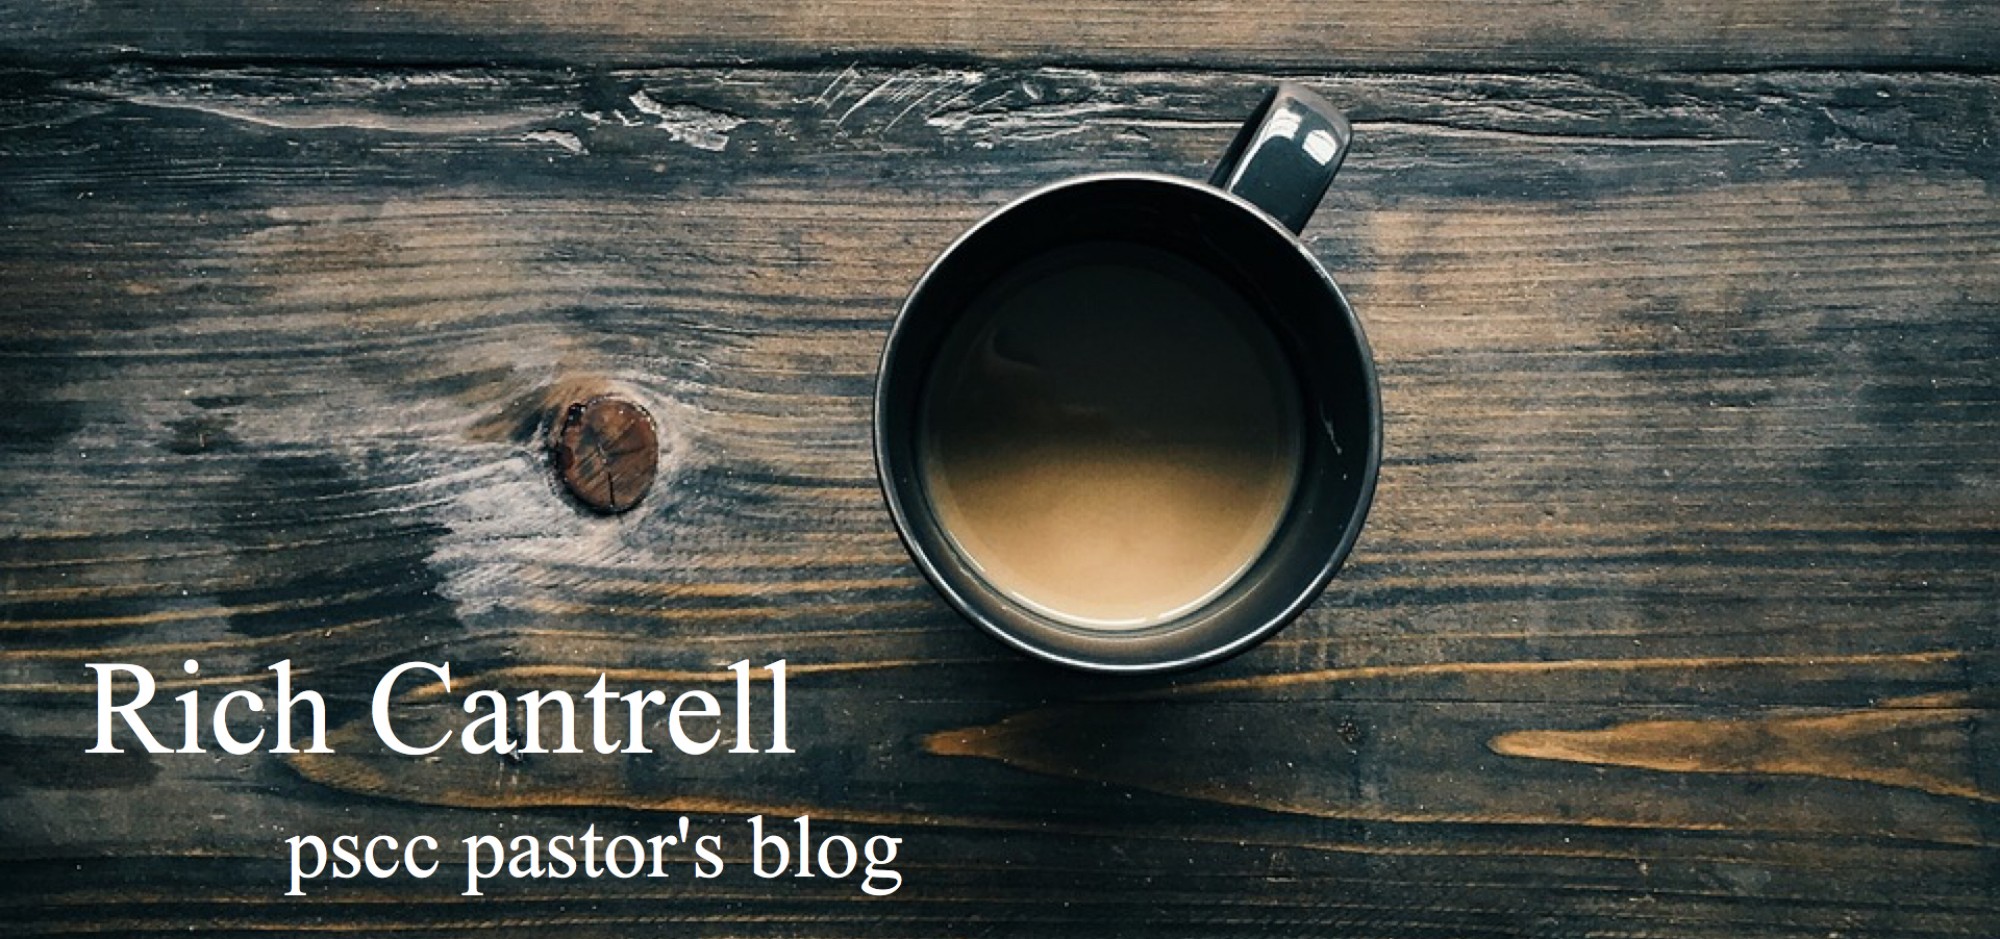 Rich Cantrell [pscc pastor's blog]